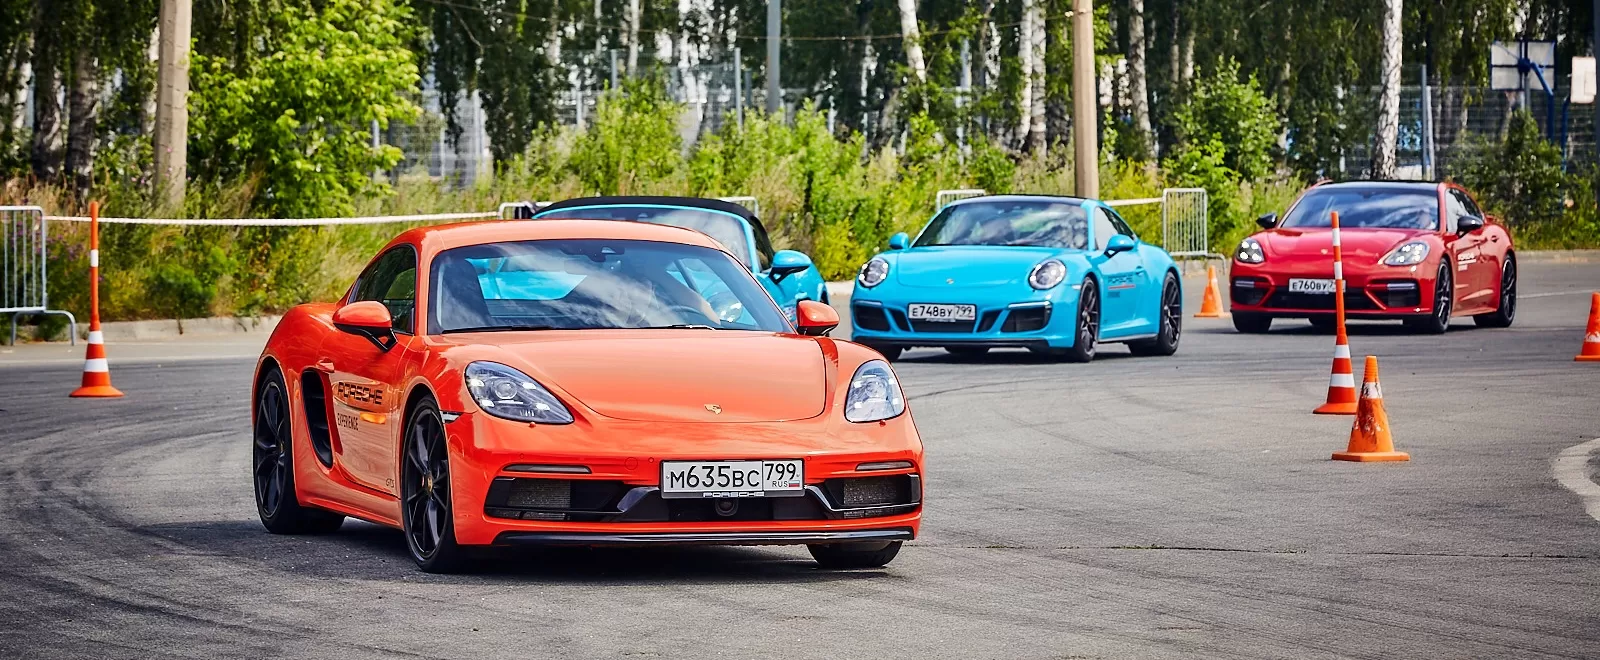 Porsche Driving Experience в Челябинске